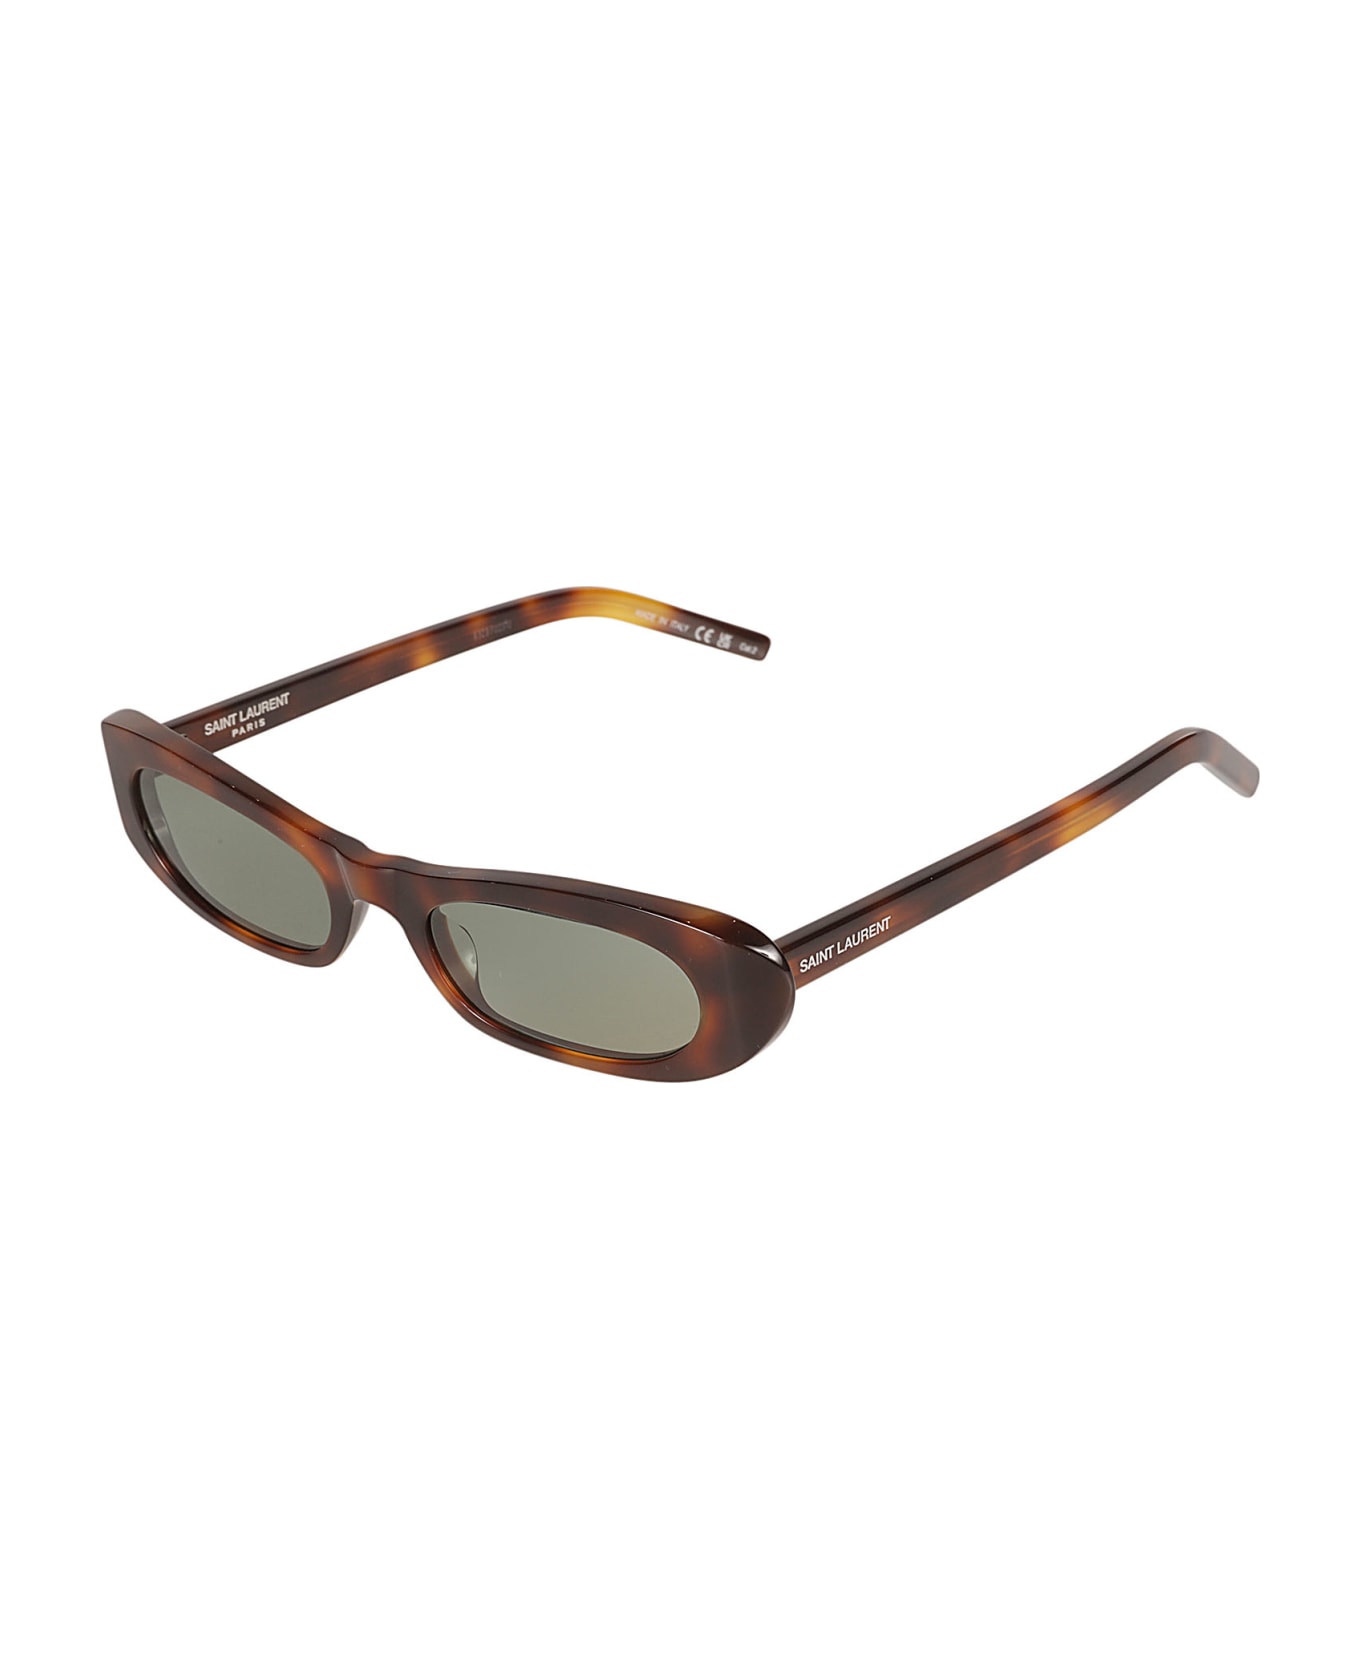 Saint Laurent Eyewear Oval Frame Flame Effect Sunglasses - Havana/Green サングラス